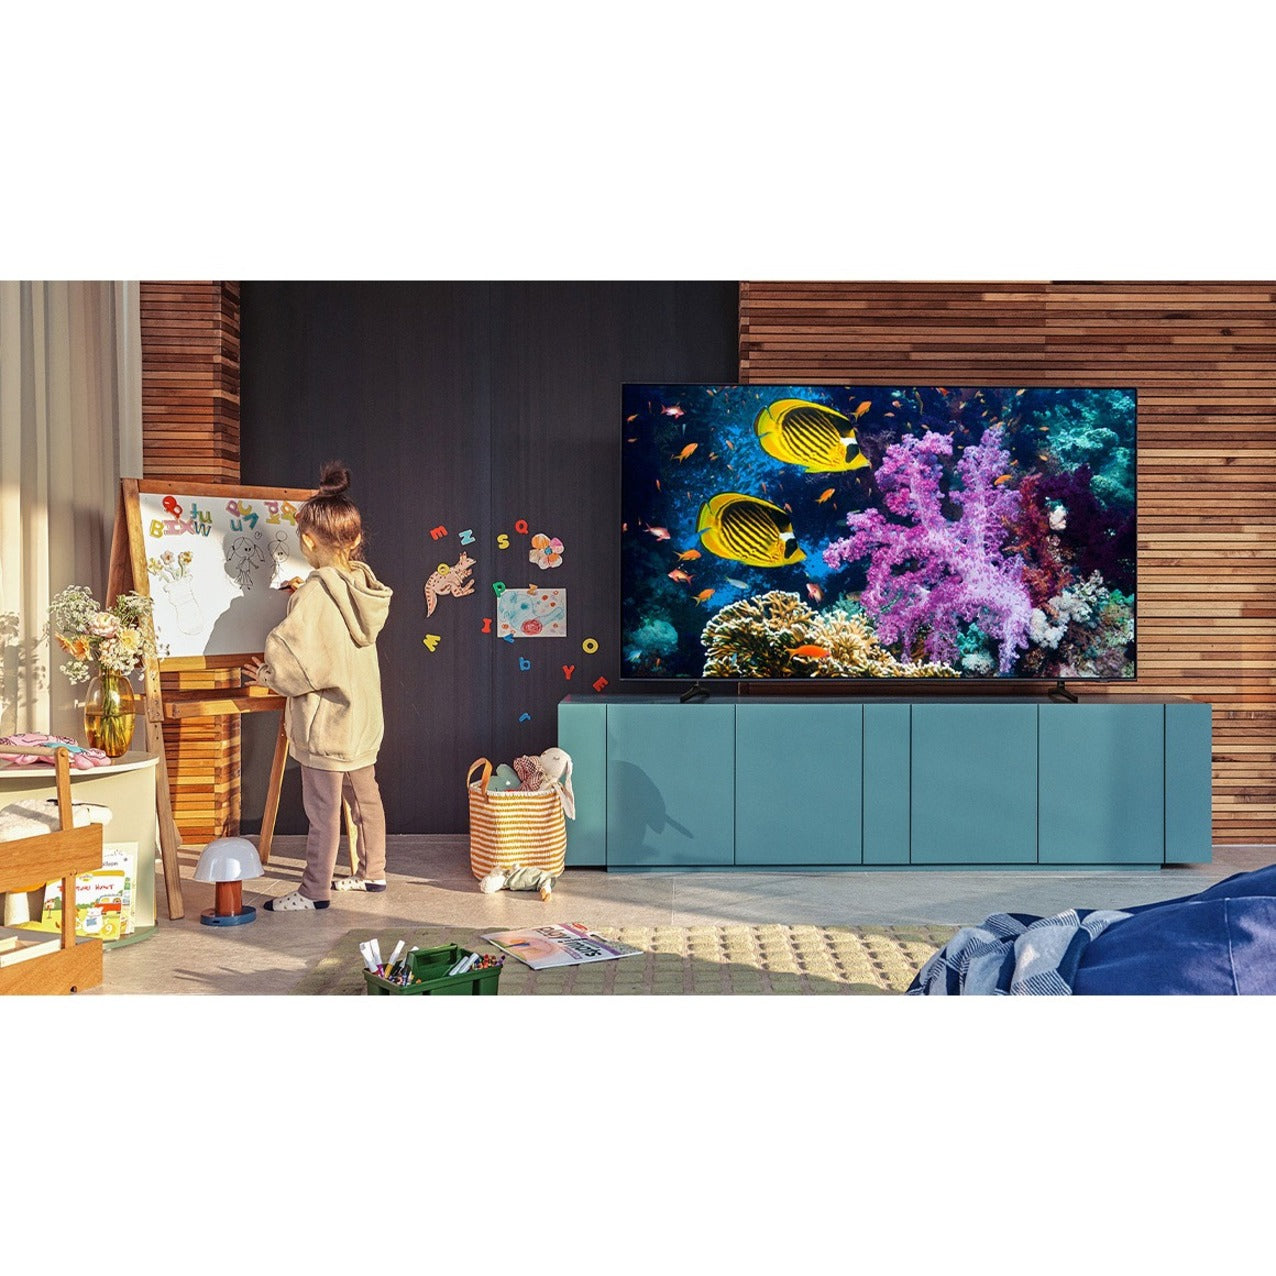 Samsung Q60A QN55Q60AAF 54.6" Smart LED-LCD TV - 4K UHDTV - Black